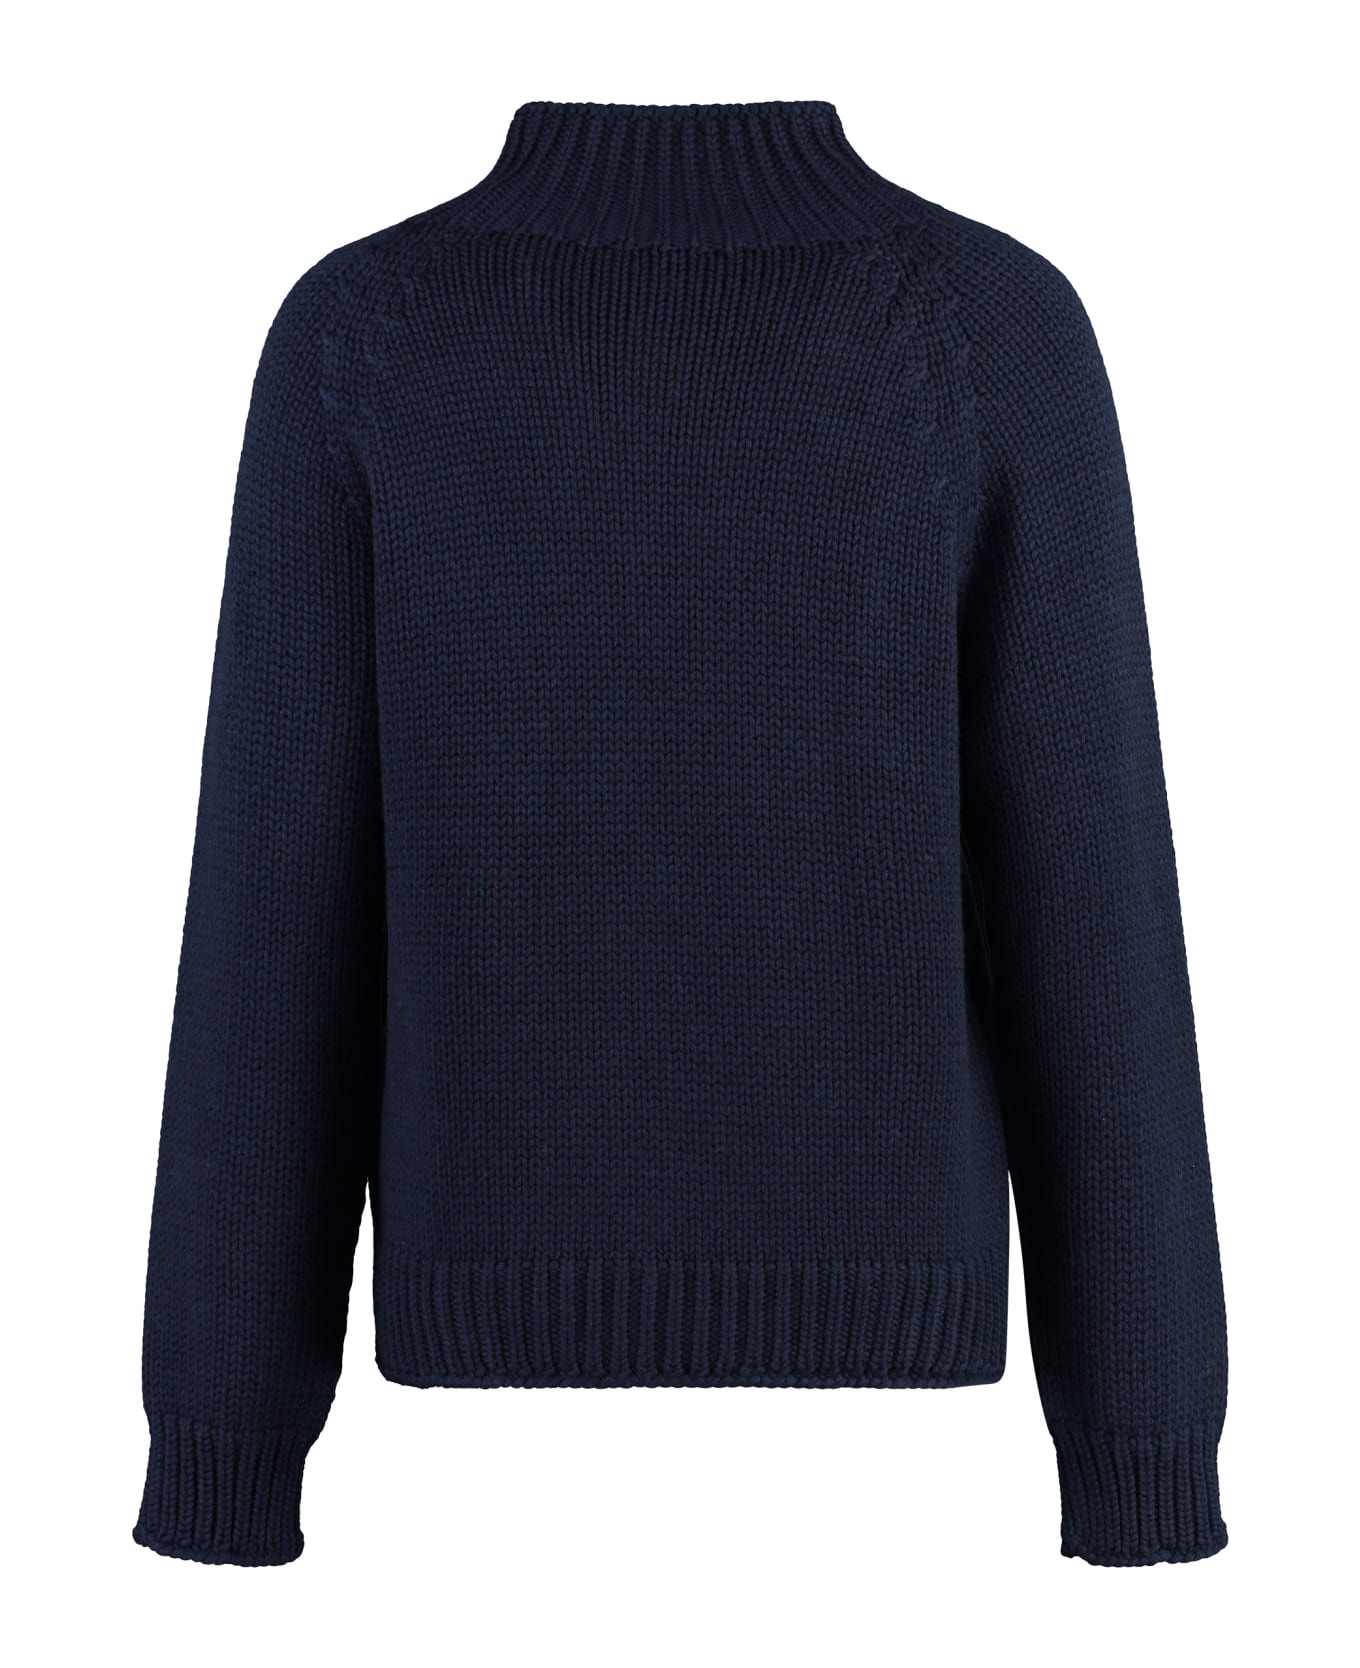 Fabiana Filippi Wool Turtleneck Sweater - blue ニットウェア